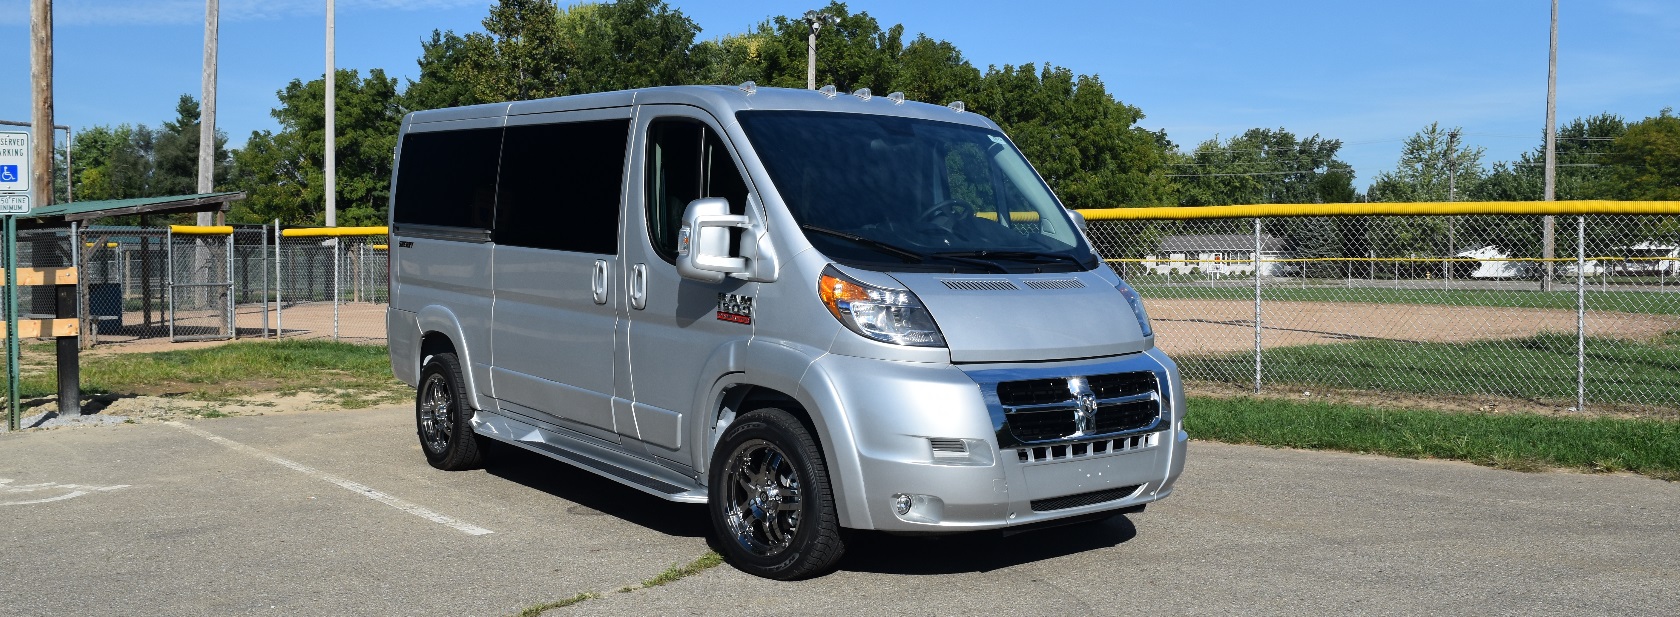 Wheelchair Vans For Sale Ohio | Paul Sherry Vans